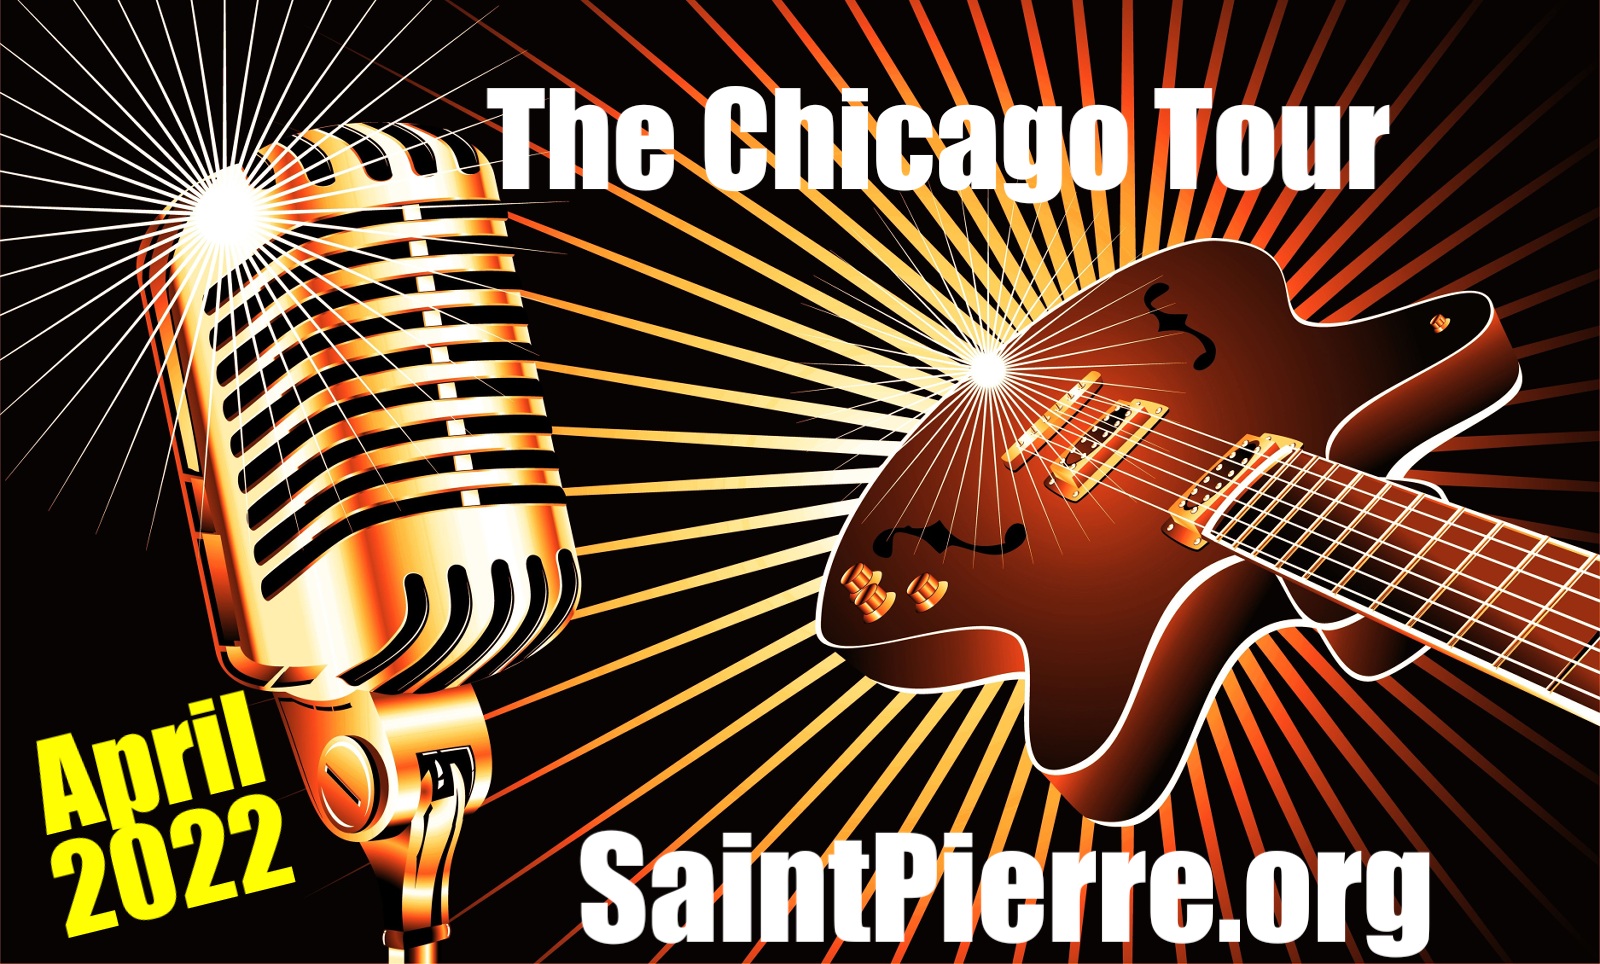 The Chicago Toui with Saint Pierre